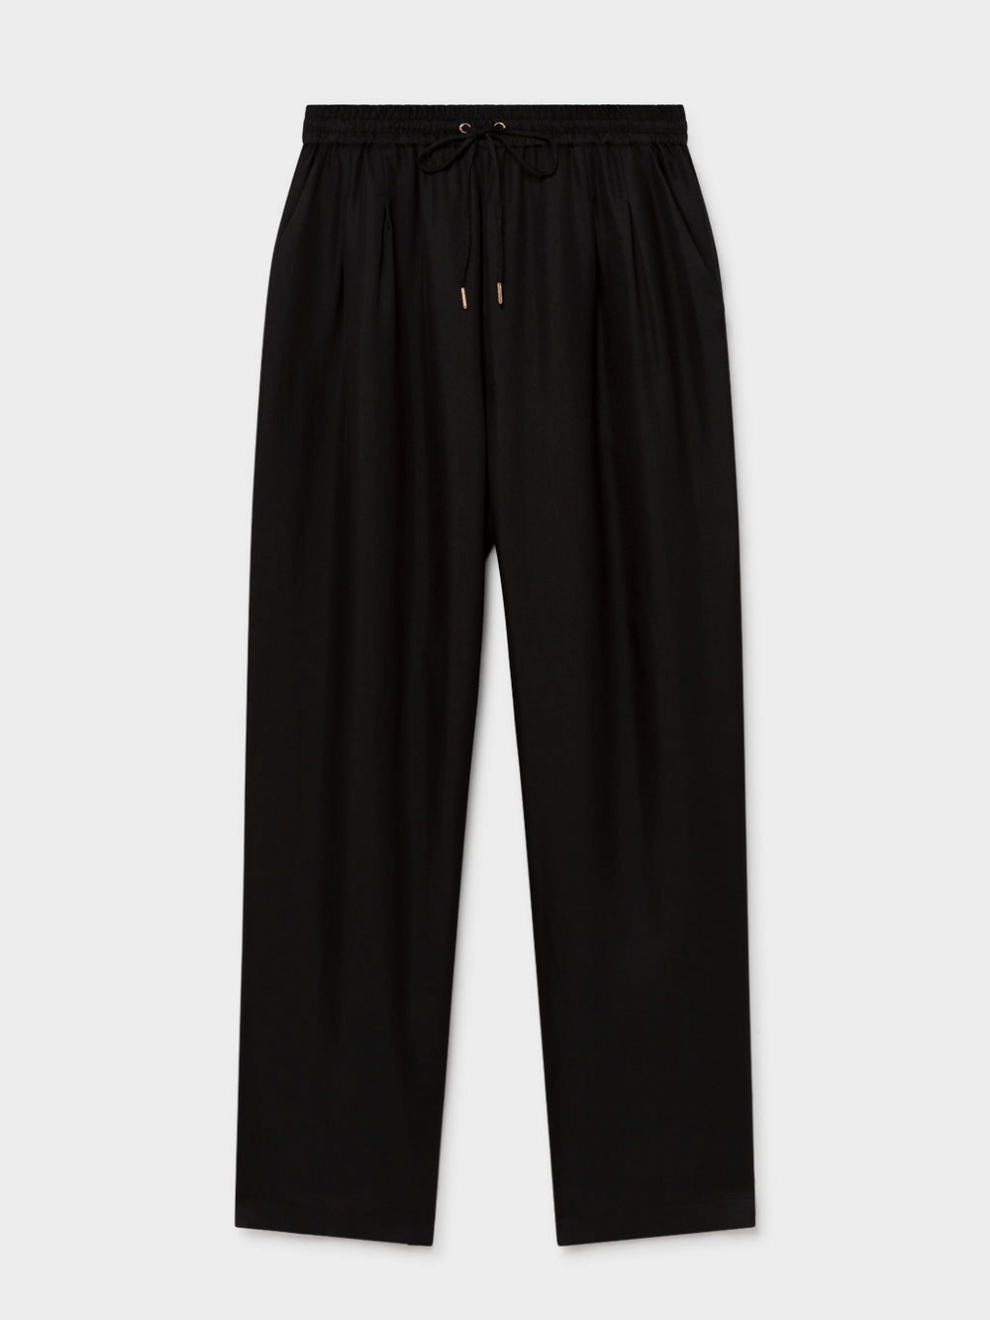 Silk Twill Slouch Pants in Black